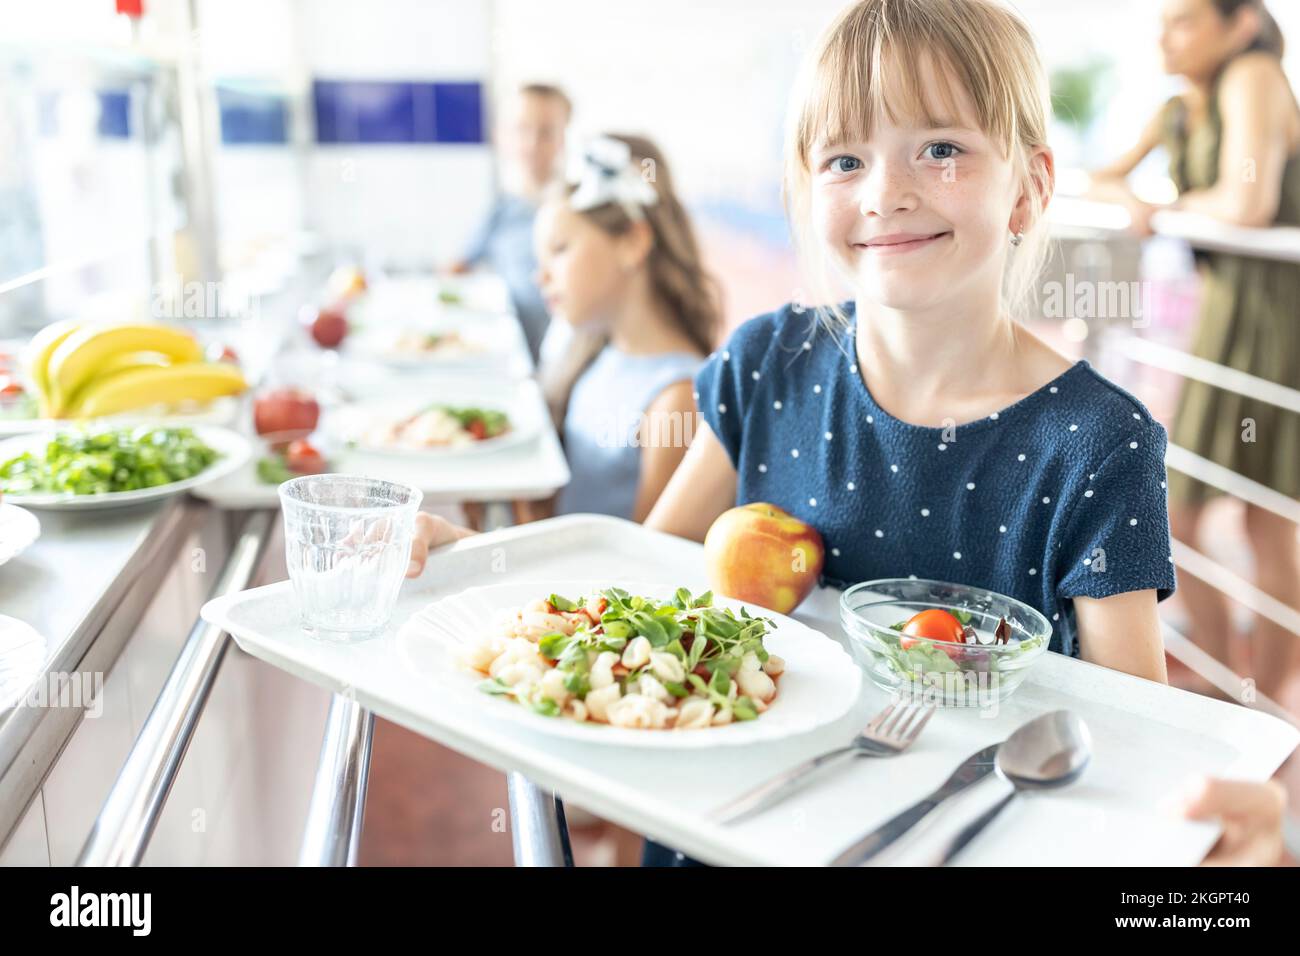 https://c8.alamy.com/comp/2KGPT40/smiling-girl-holding-food-tray-in-school-cafeteria-2KGPT40.jpg